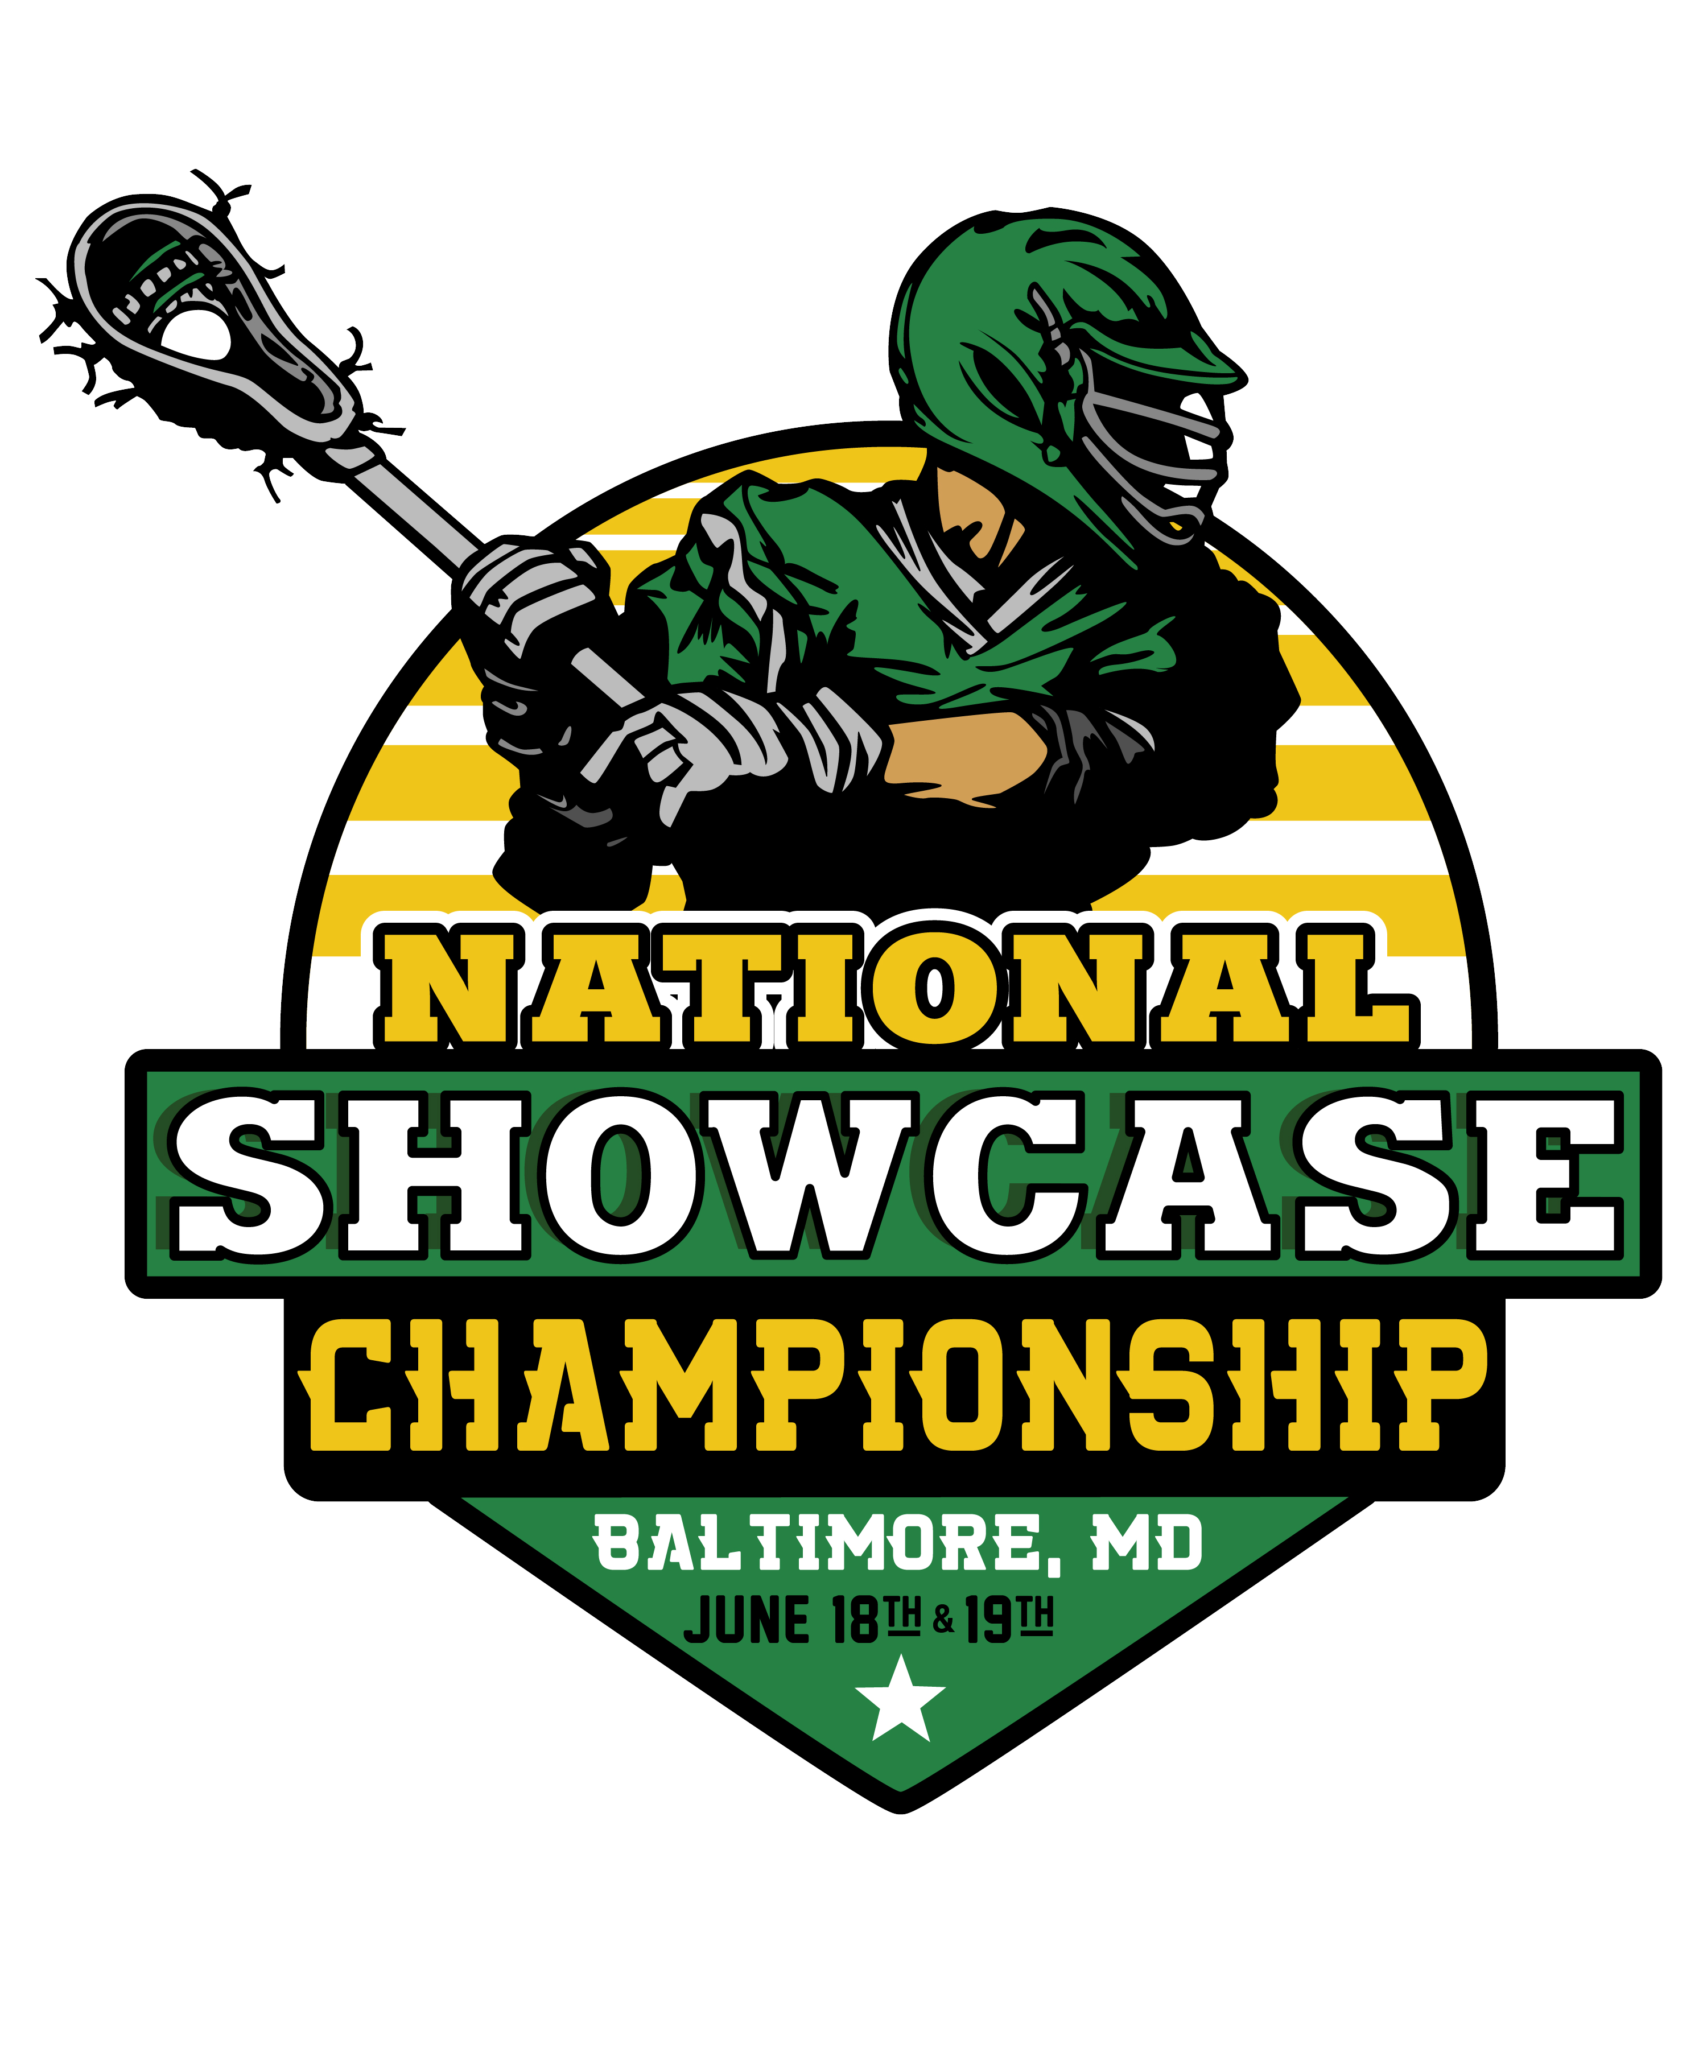 National Showcase Championship logo